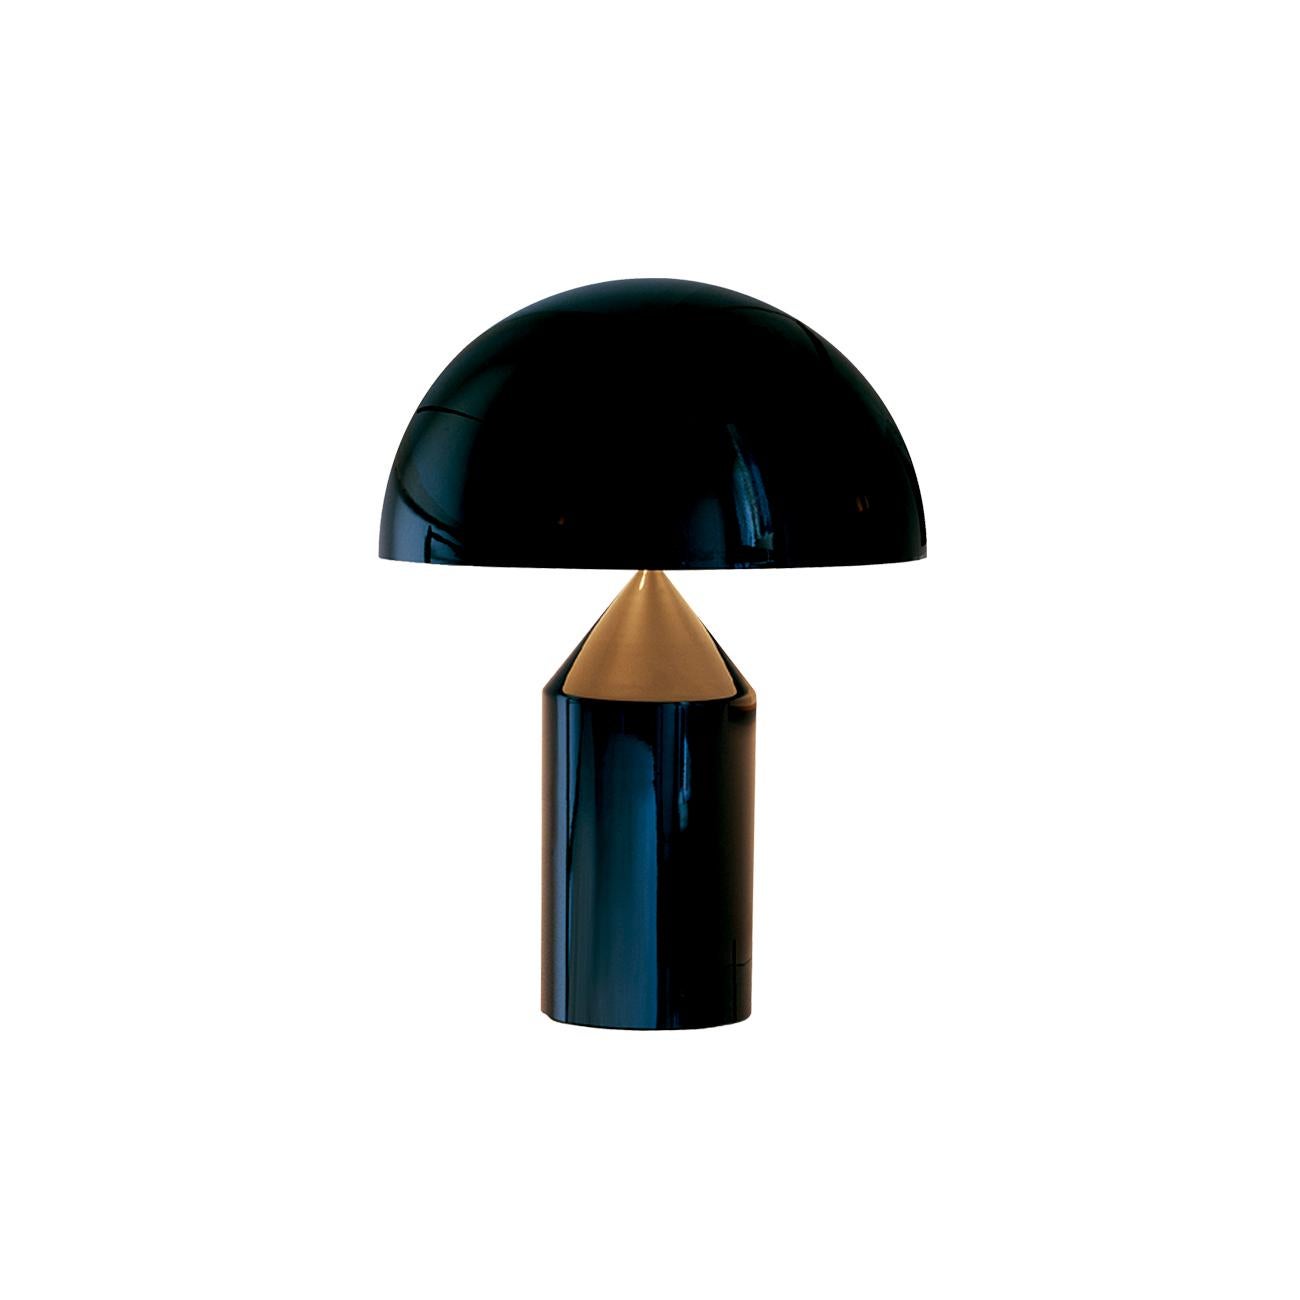 Mid-Century Modern Set of 'Atollo' Large and Medium Black Table Lamp designed by Vico Magistretti